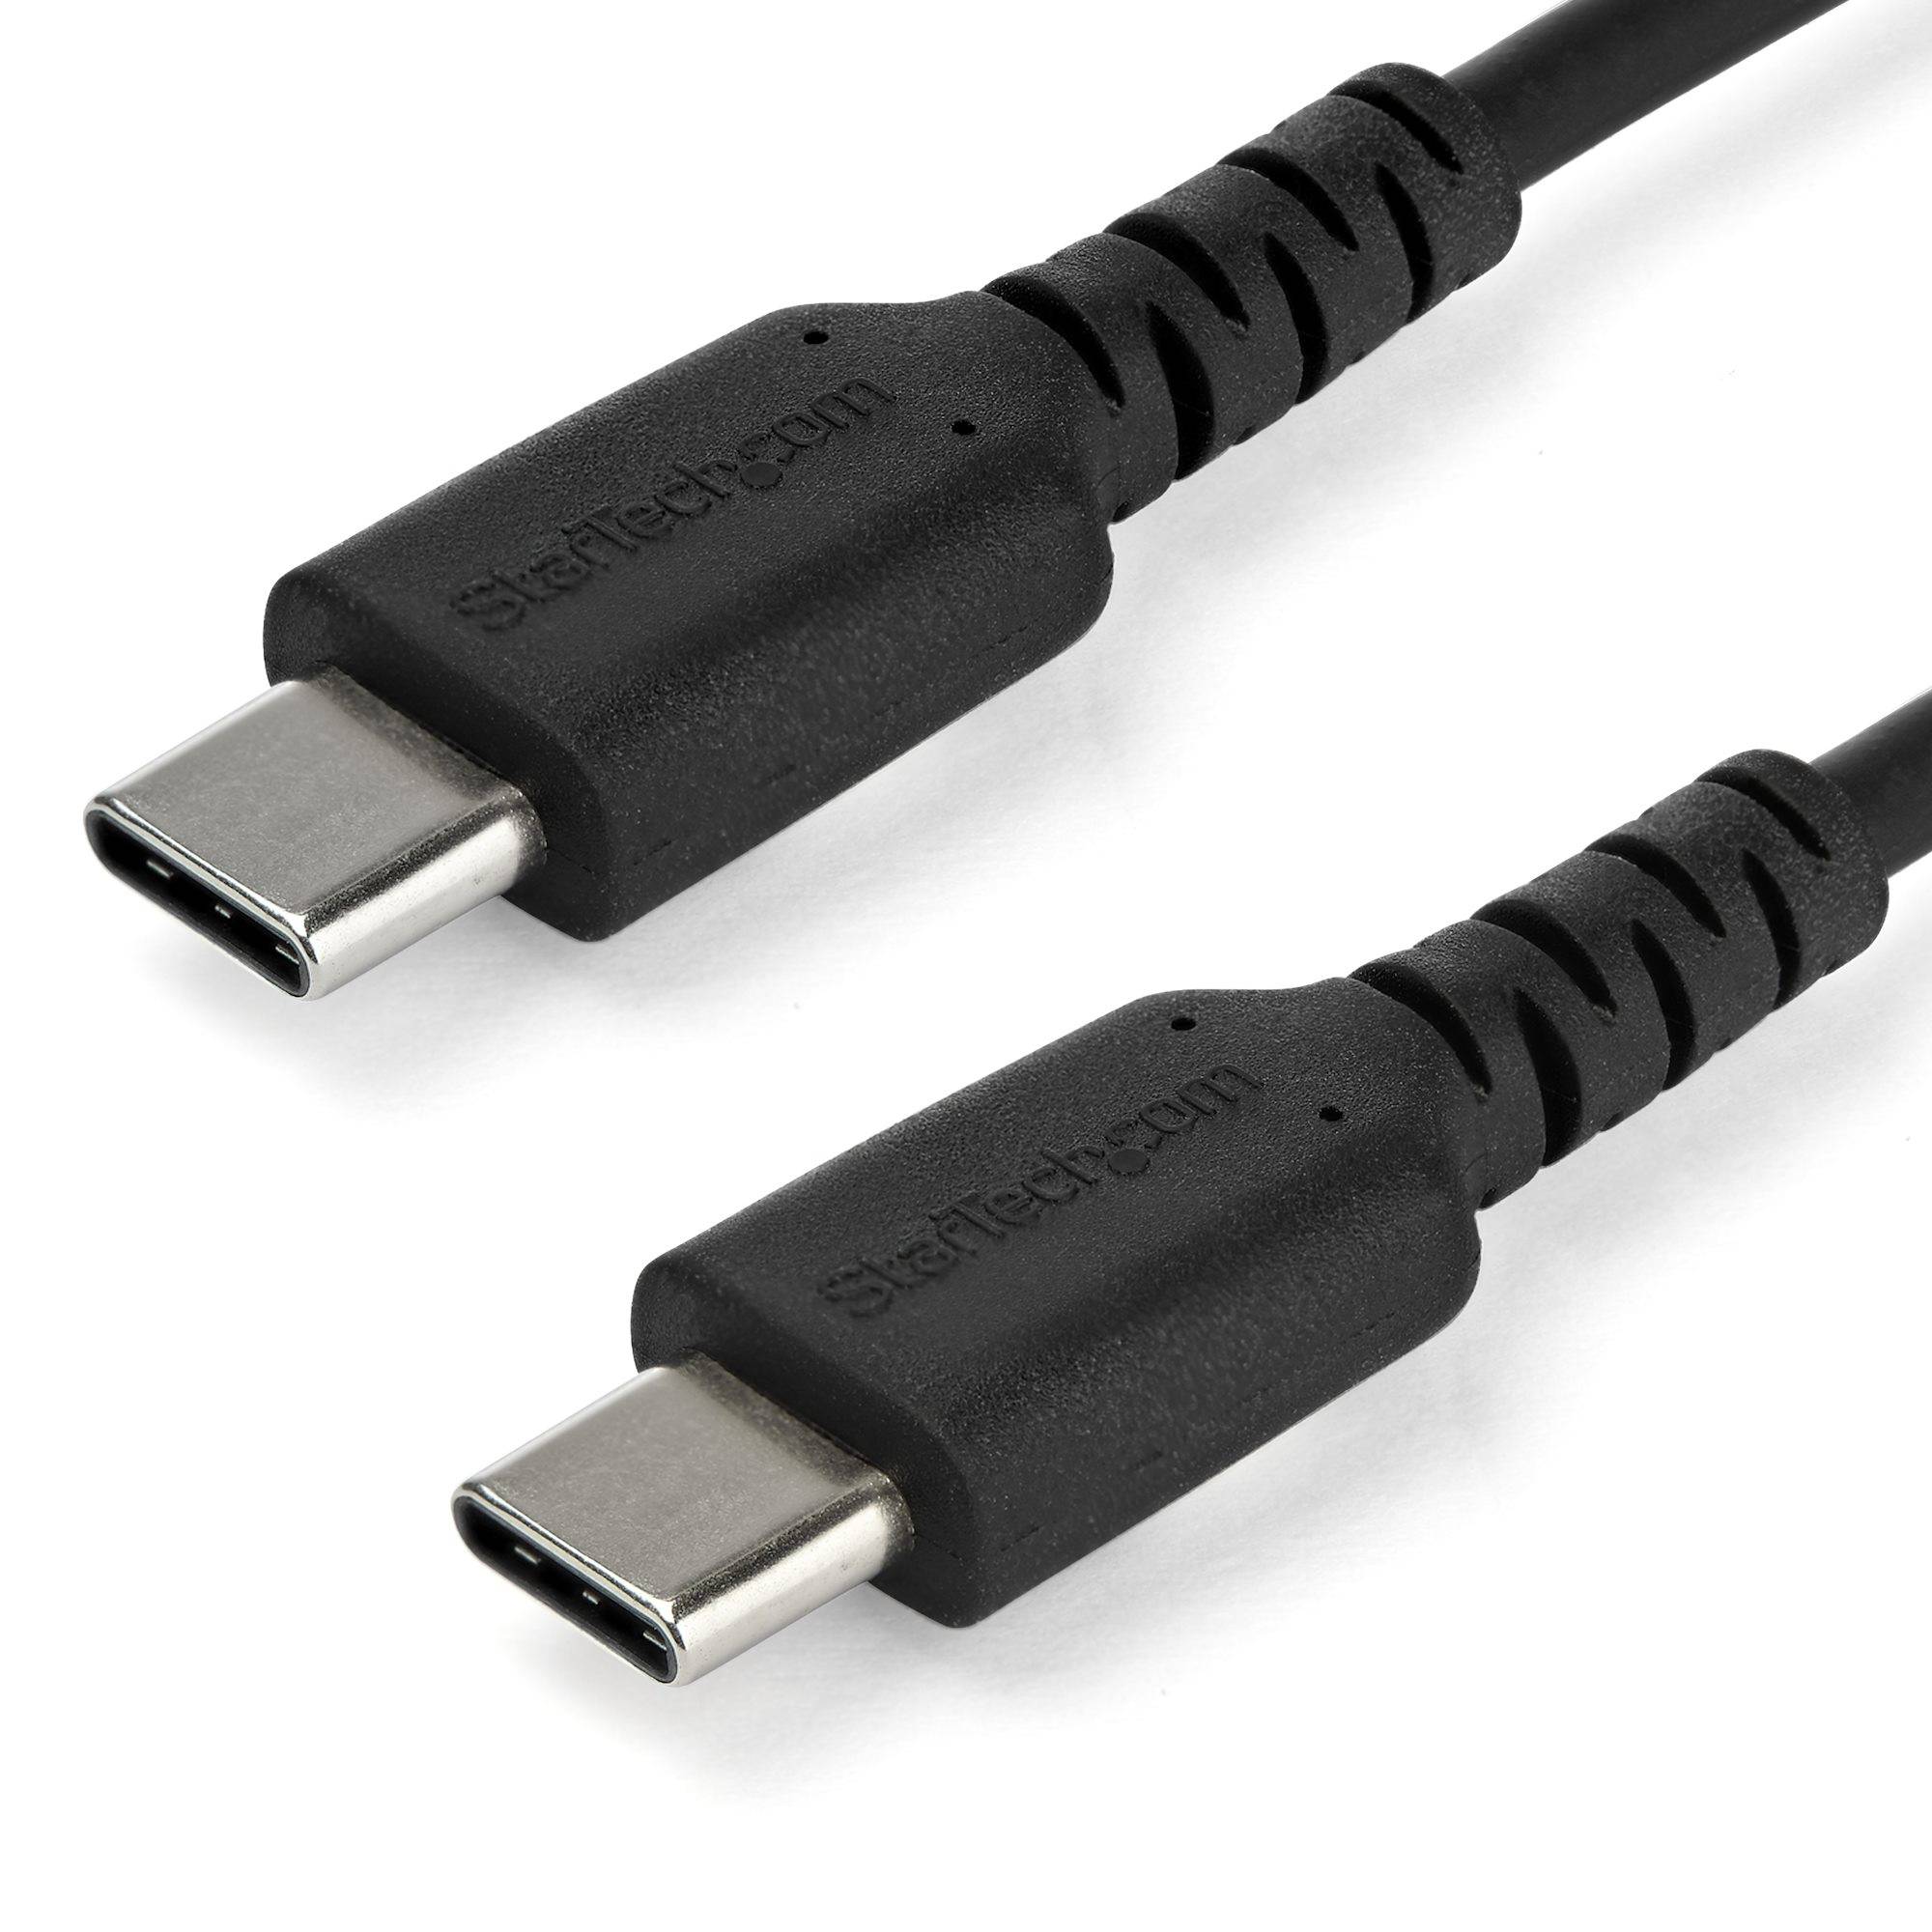 Rca Informatique - Image du produit : 1M USB C CABLE BLACK HIGH QUALITY ARAMID FIBER